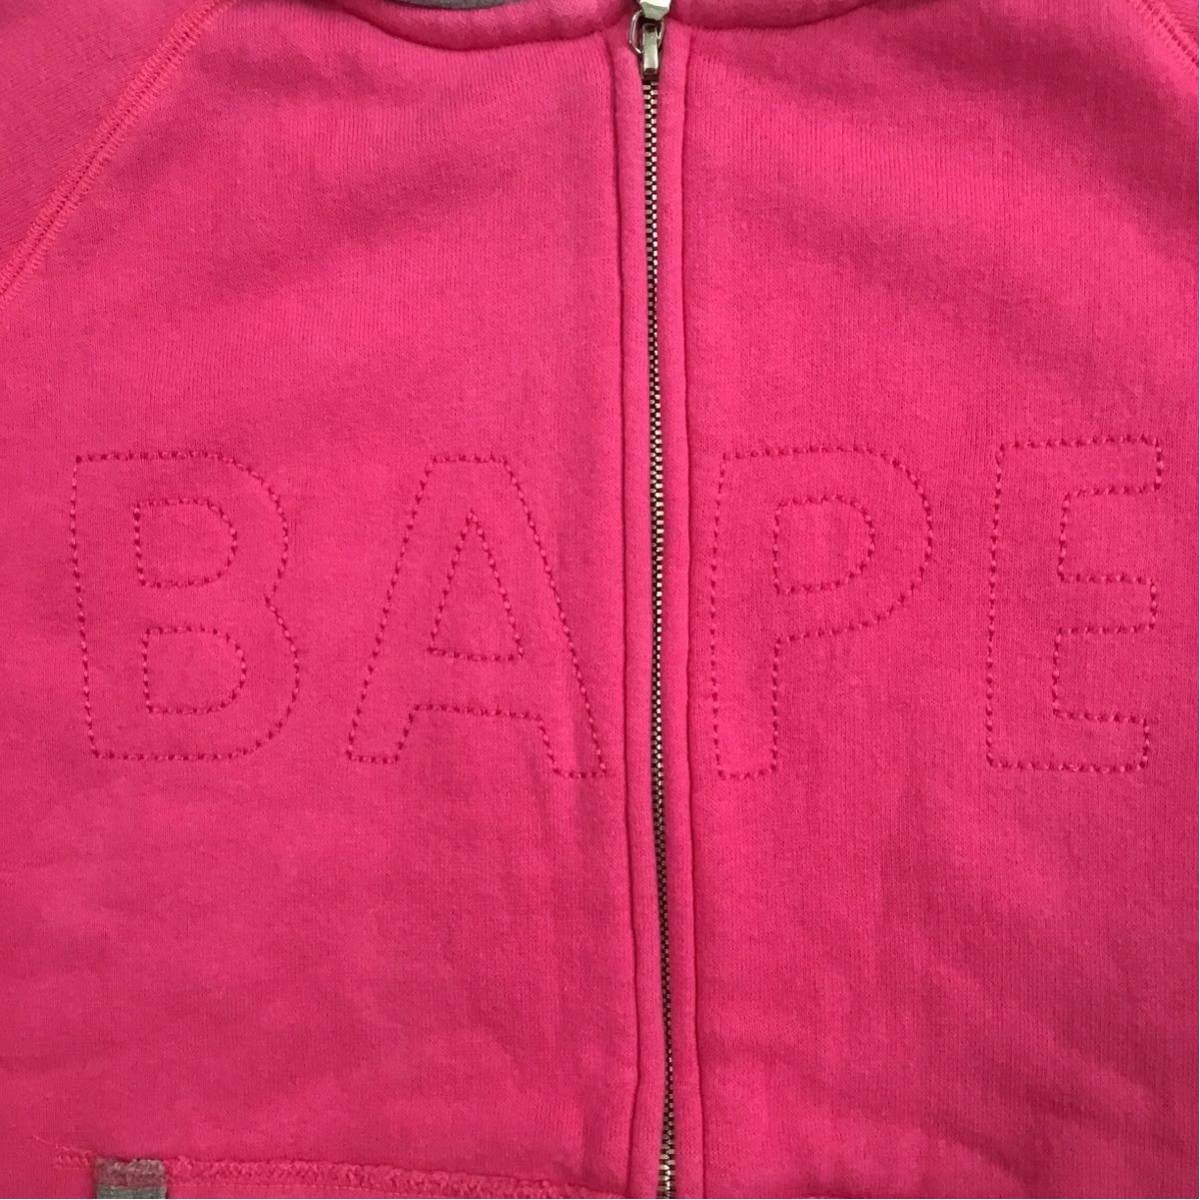 Bape BAPE Pink camo × Pink BAPE logo zip hoodie ape NIGO Size US S / EU 44-46 / 1 - 6 Thumbnail